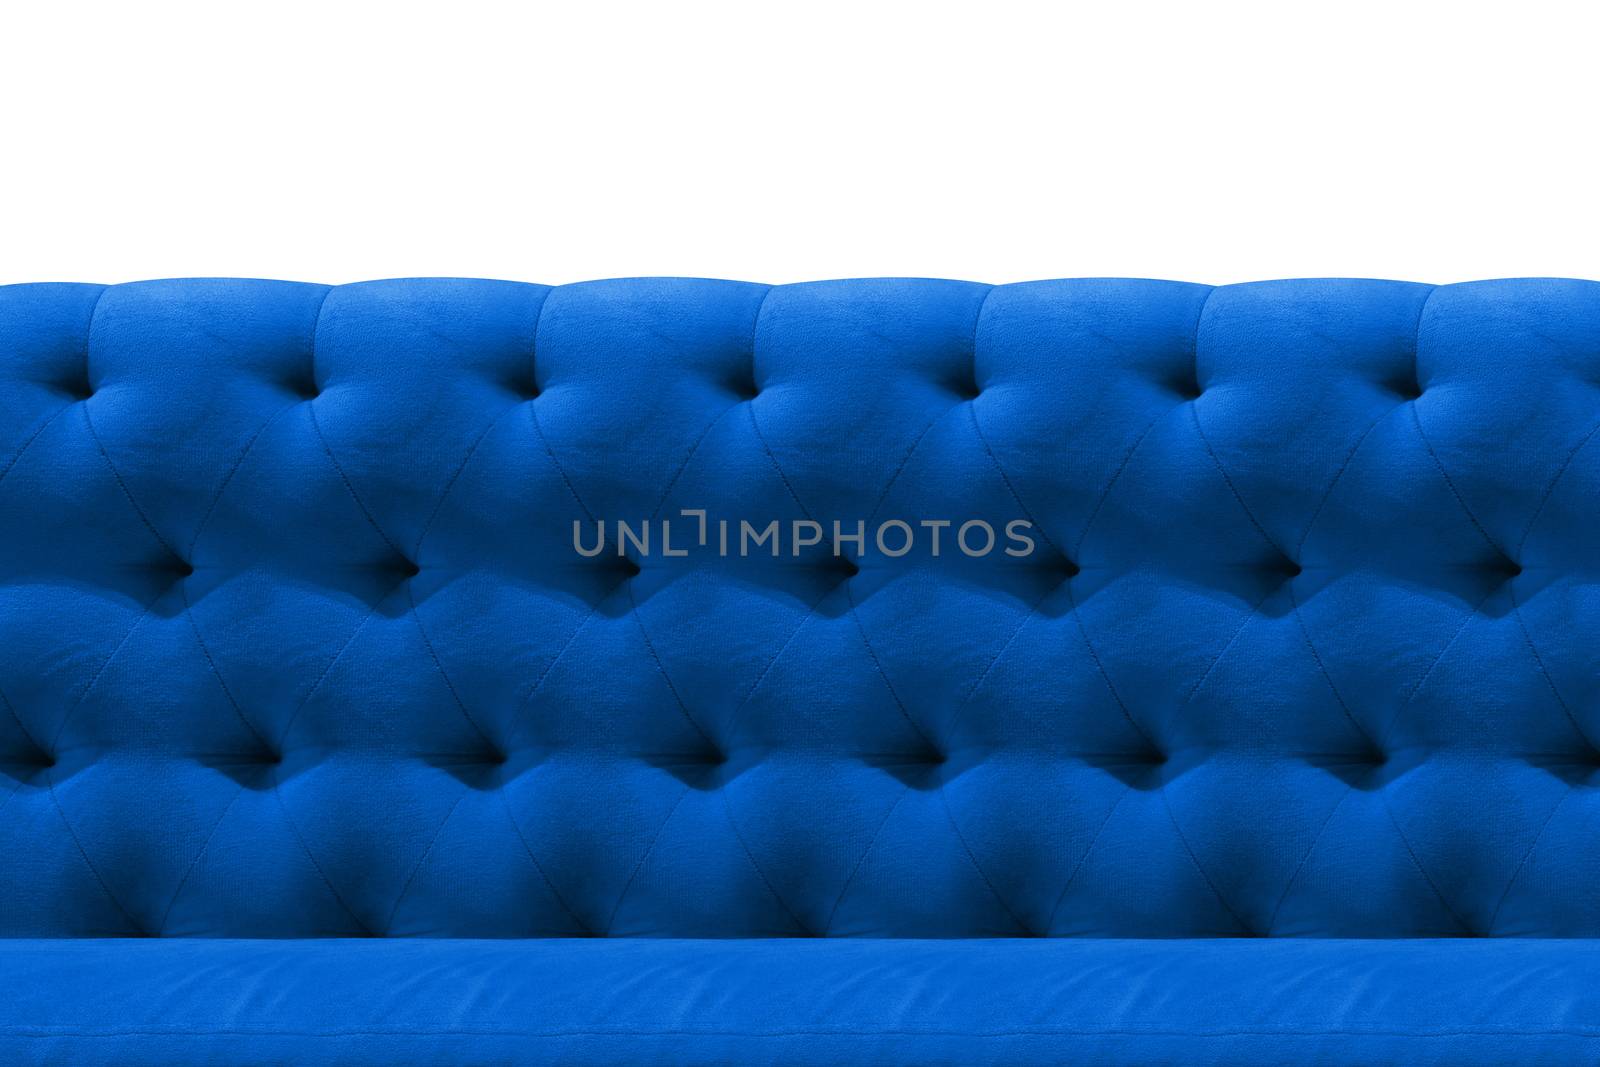 Luxury Dark Blue sofa velvet cushion close-up pattern background on white by cgdeaw